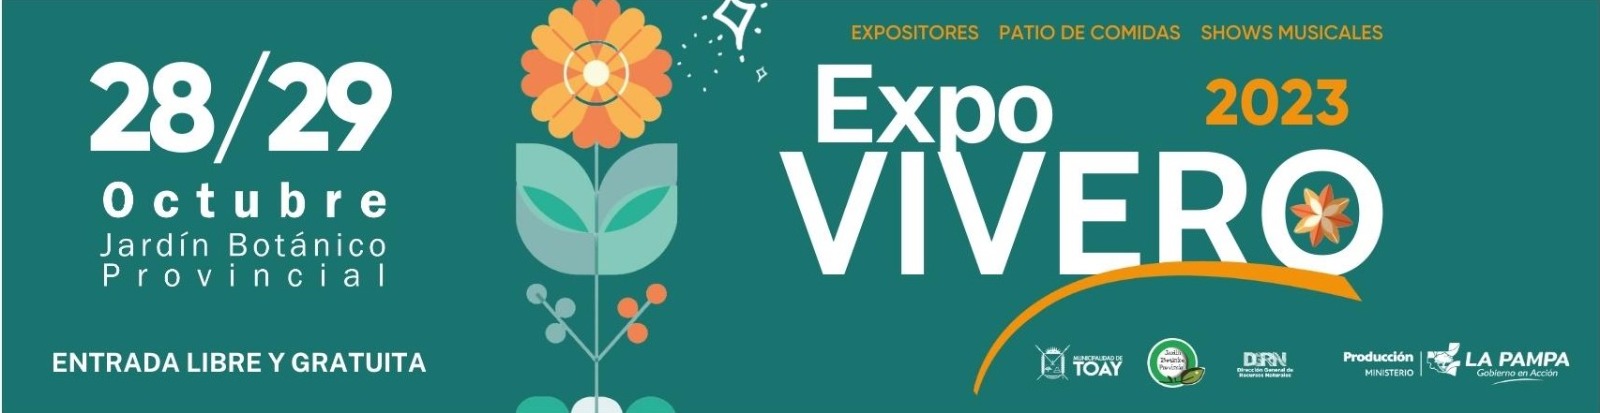 EXPO VIVERO 2023